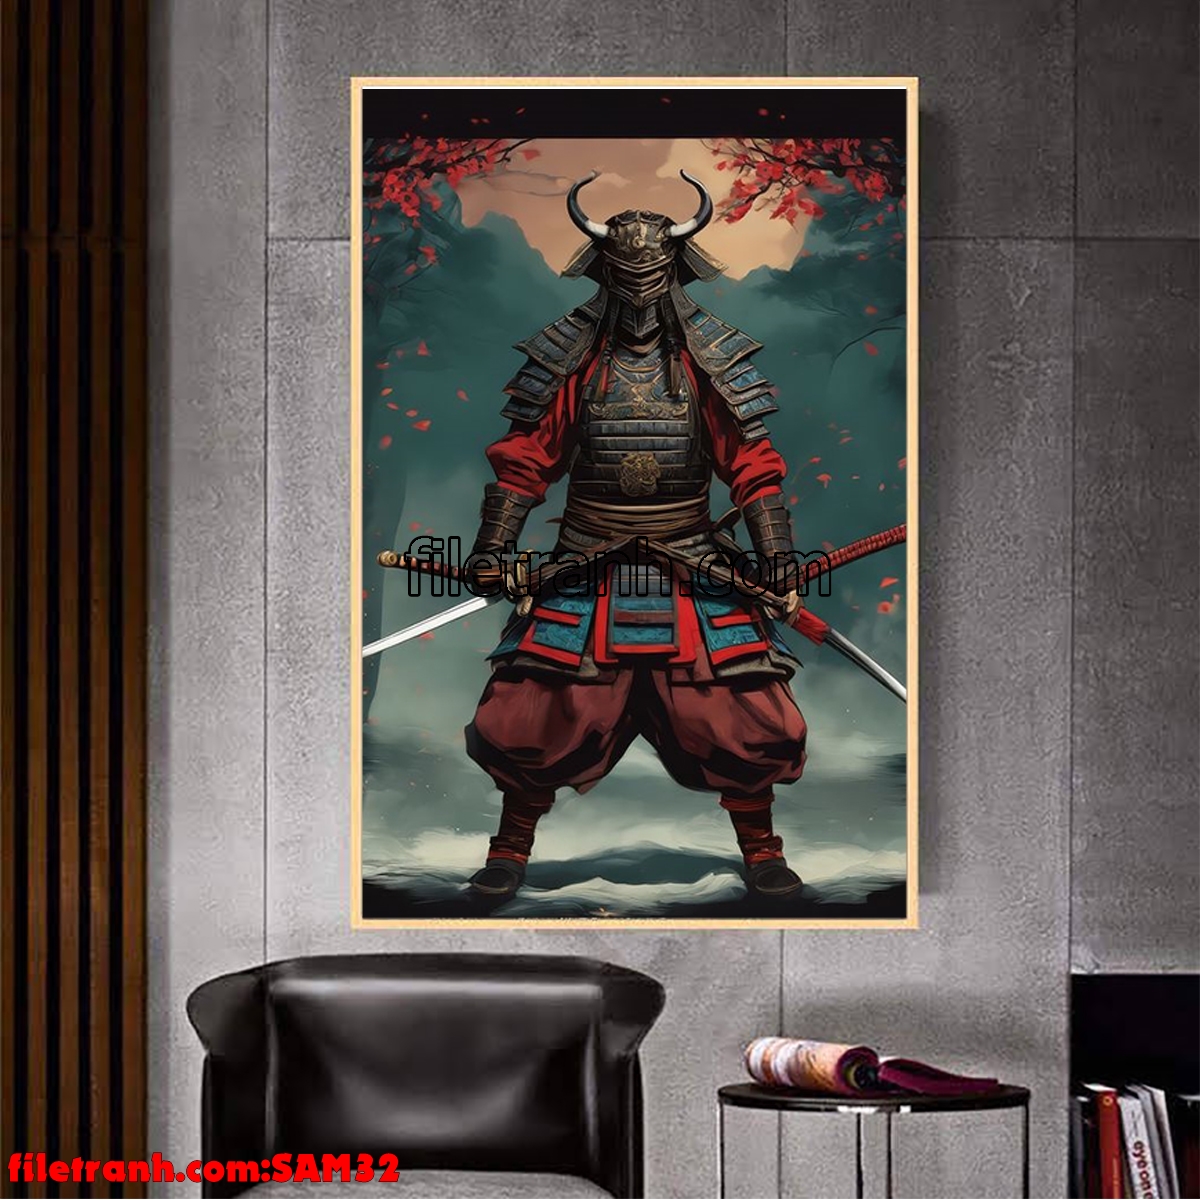 https://filetranh.com/tuong-nen/file-tranh-samurai-vo-si-nhat-ban-sam32.html